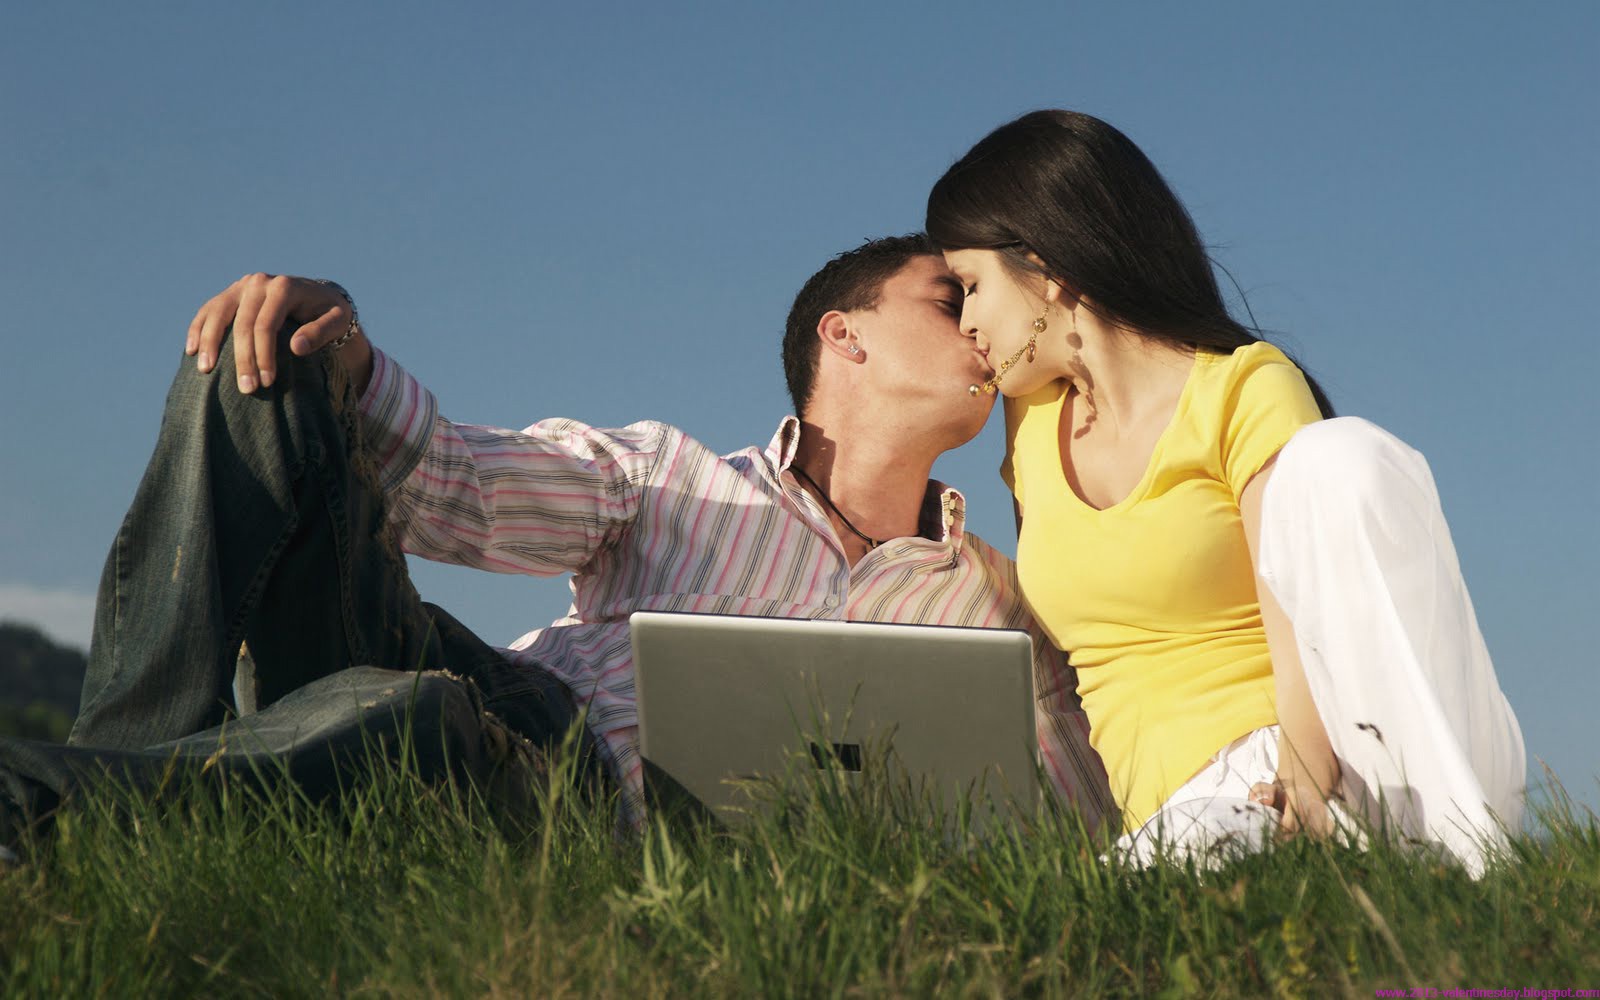 6. Top And Best Happy Kiss Day Desktop Wallpapers